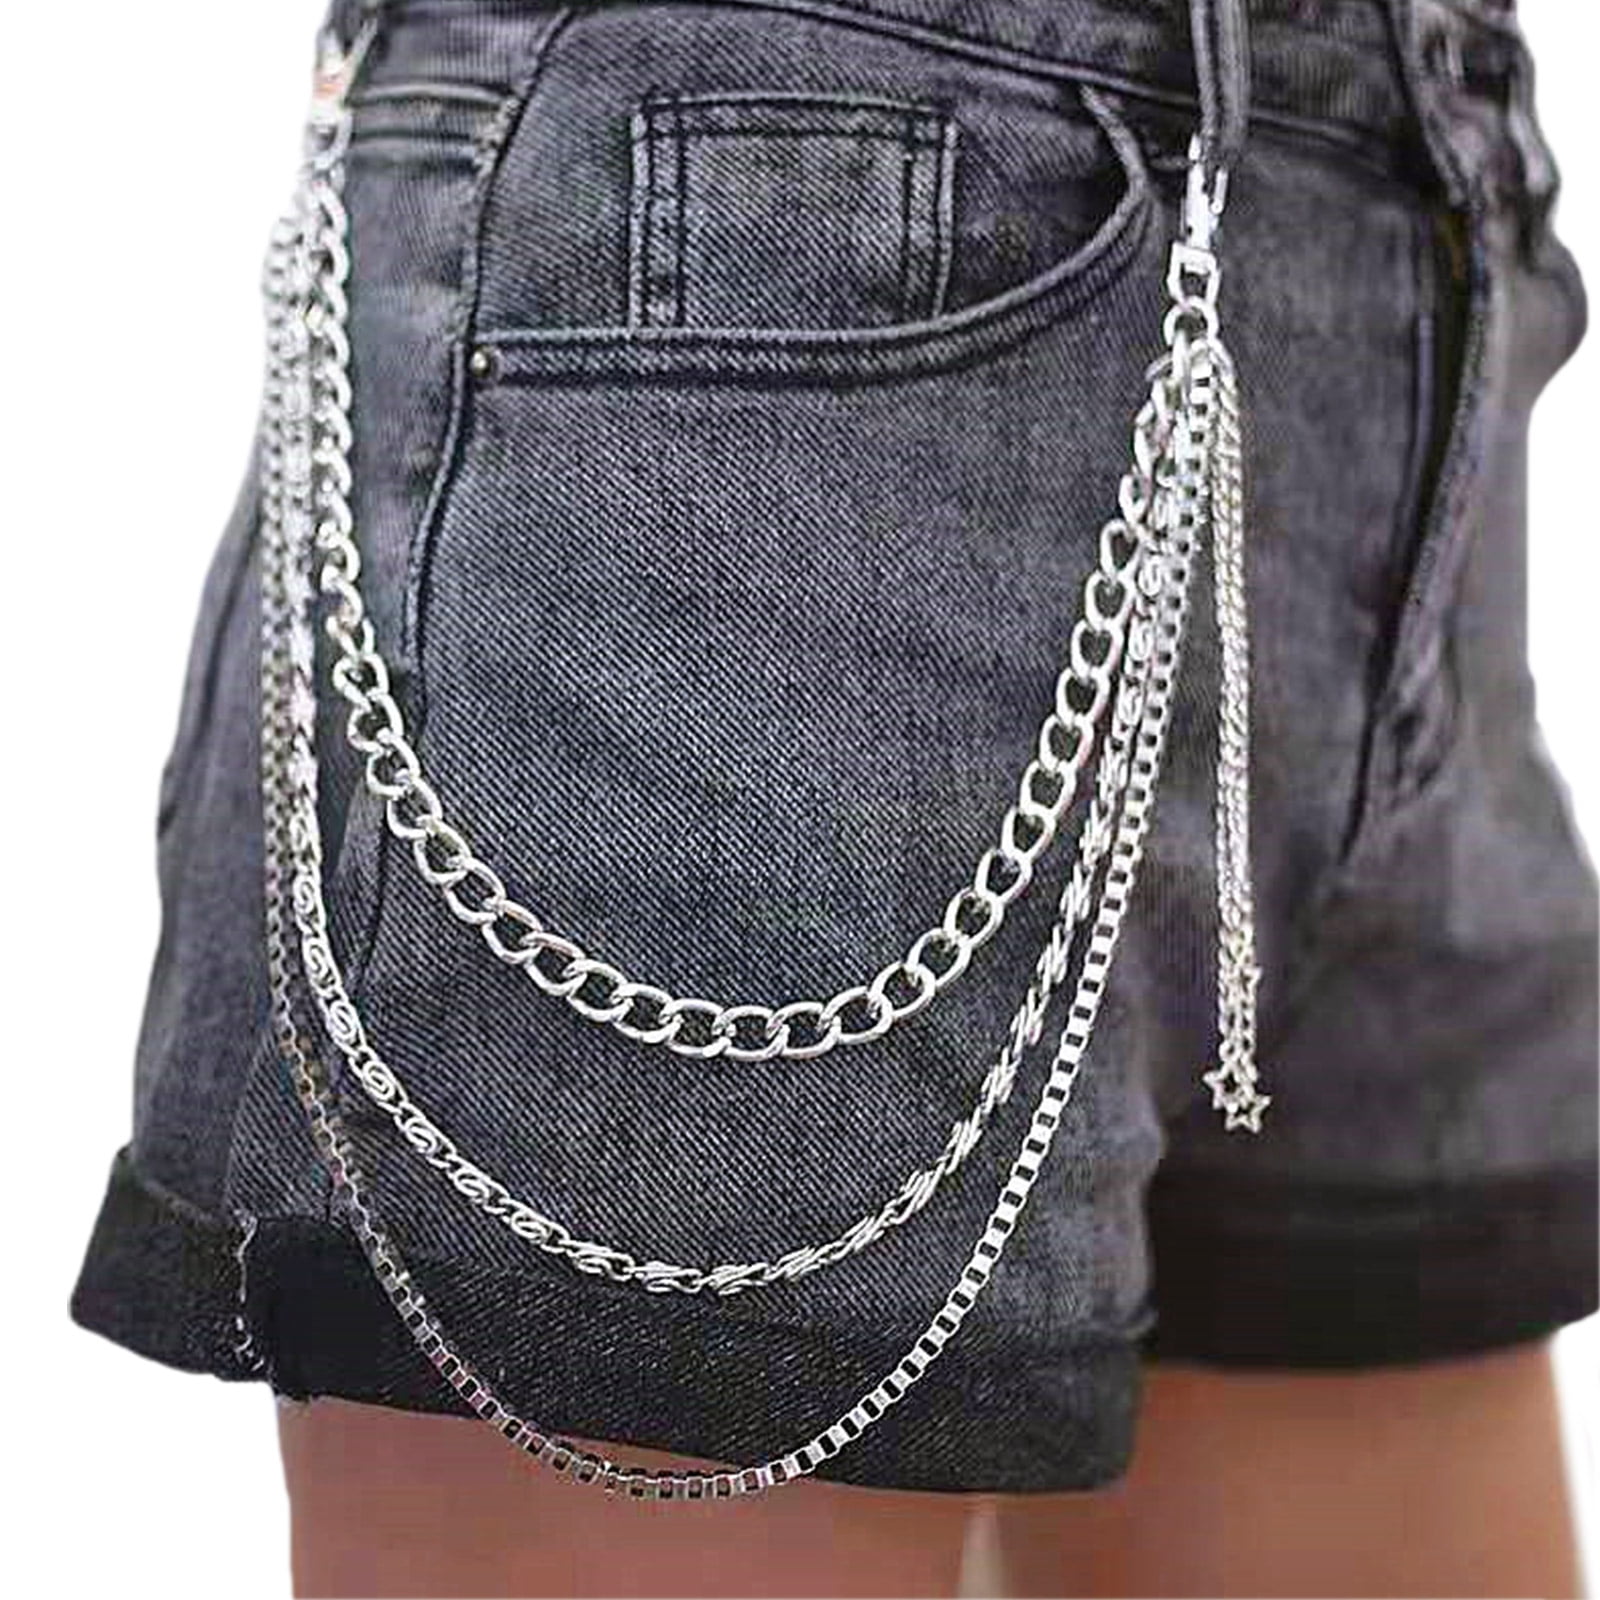 Visland Jeans Chain Wallet Pants Chain Silver Pocket Punk Chain